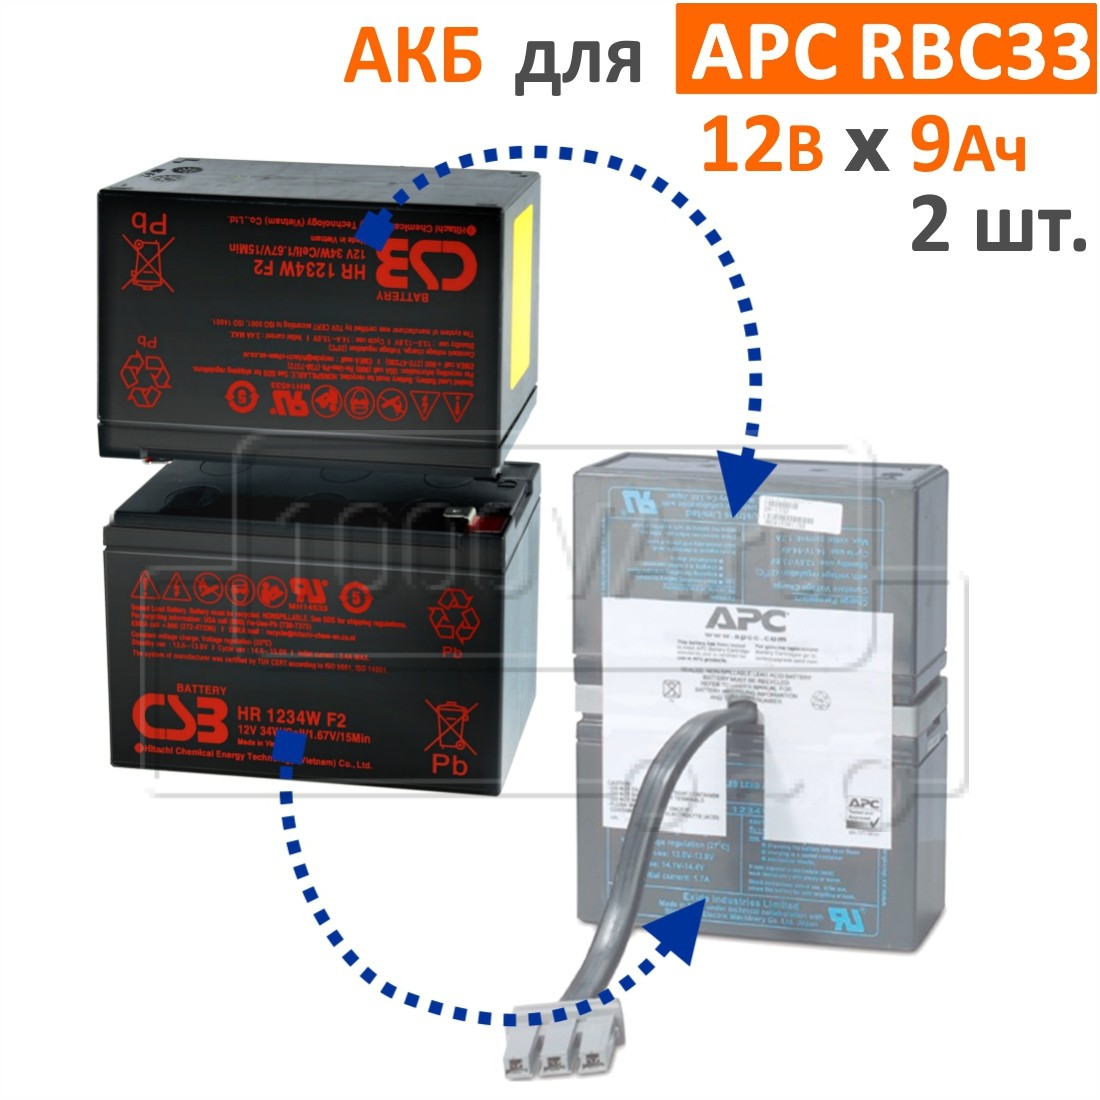 CSB, BB Battery Аналог батареи RBC33